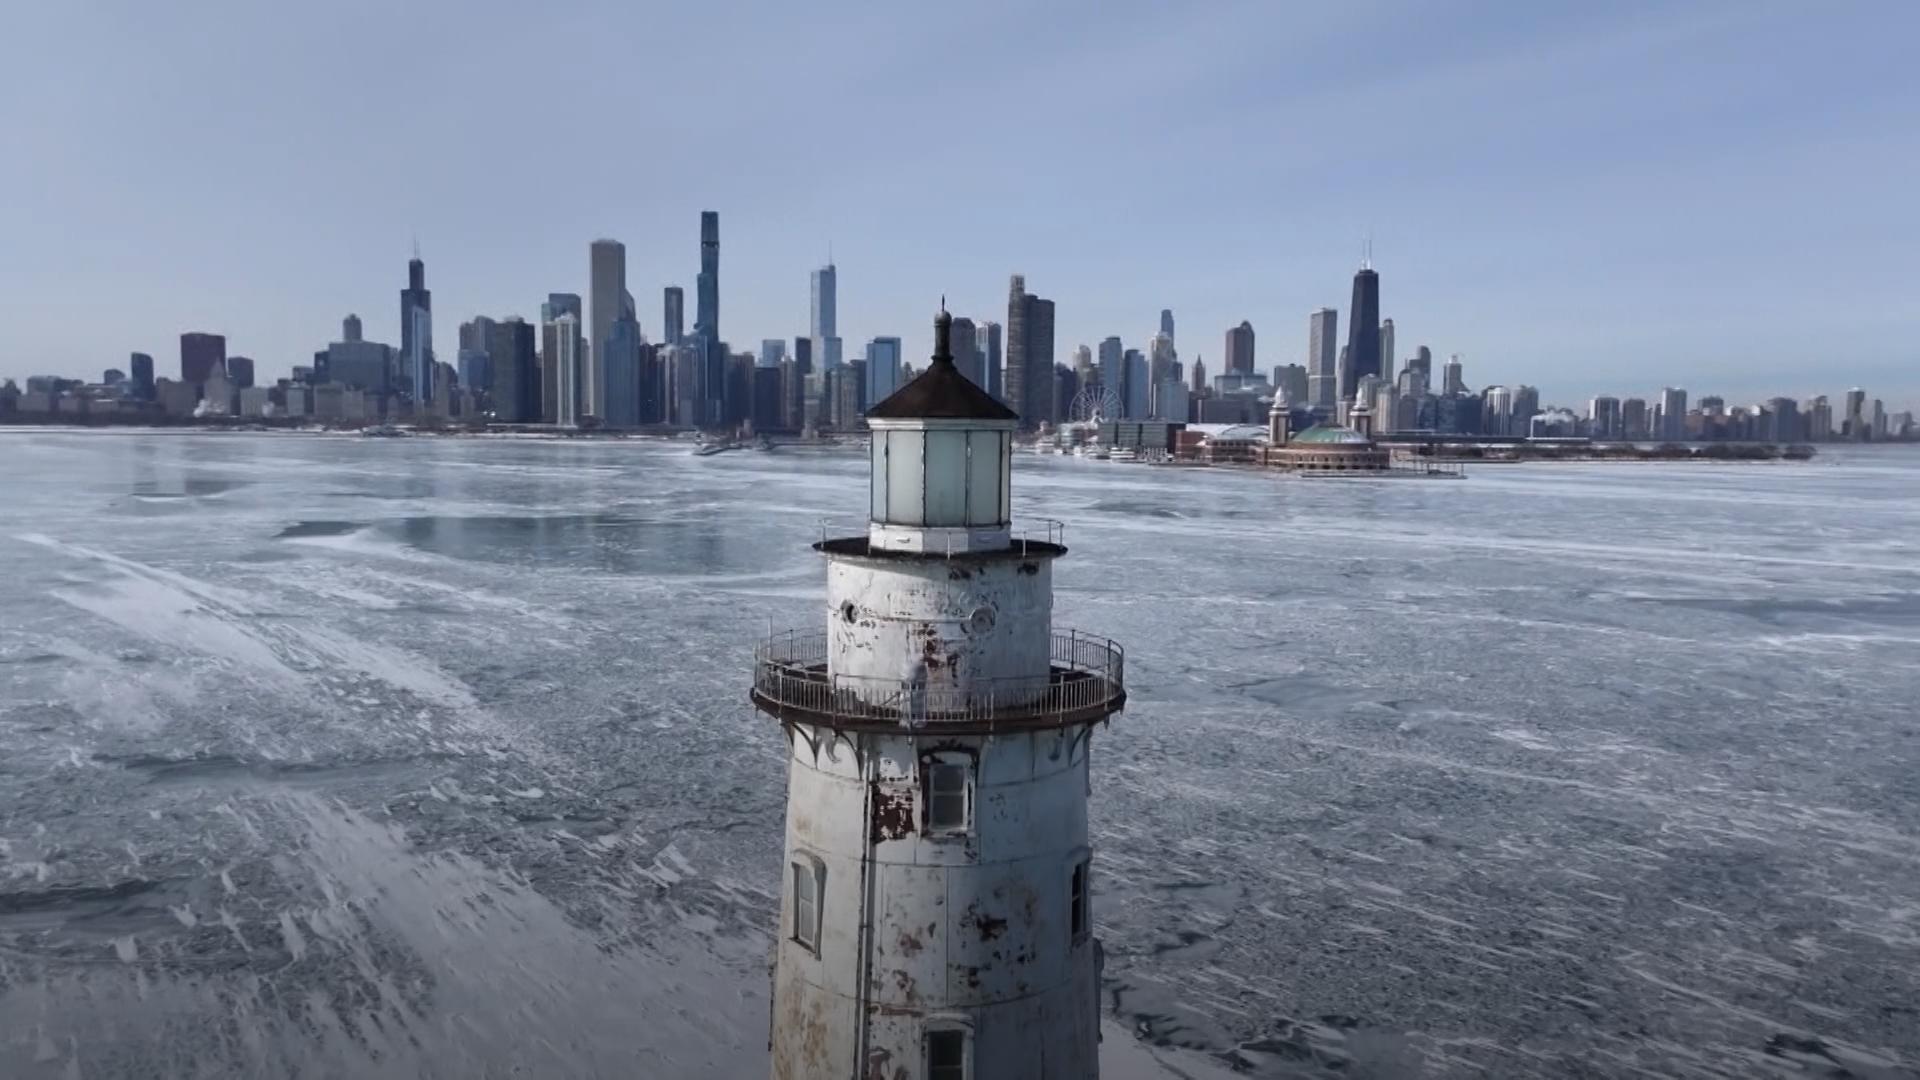 Ekstremalne zimno zamraża jeziora Michigan i Mississippi, naturalny spektakl w USA